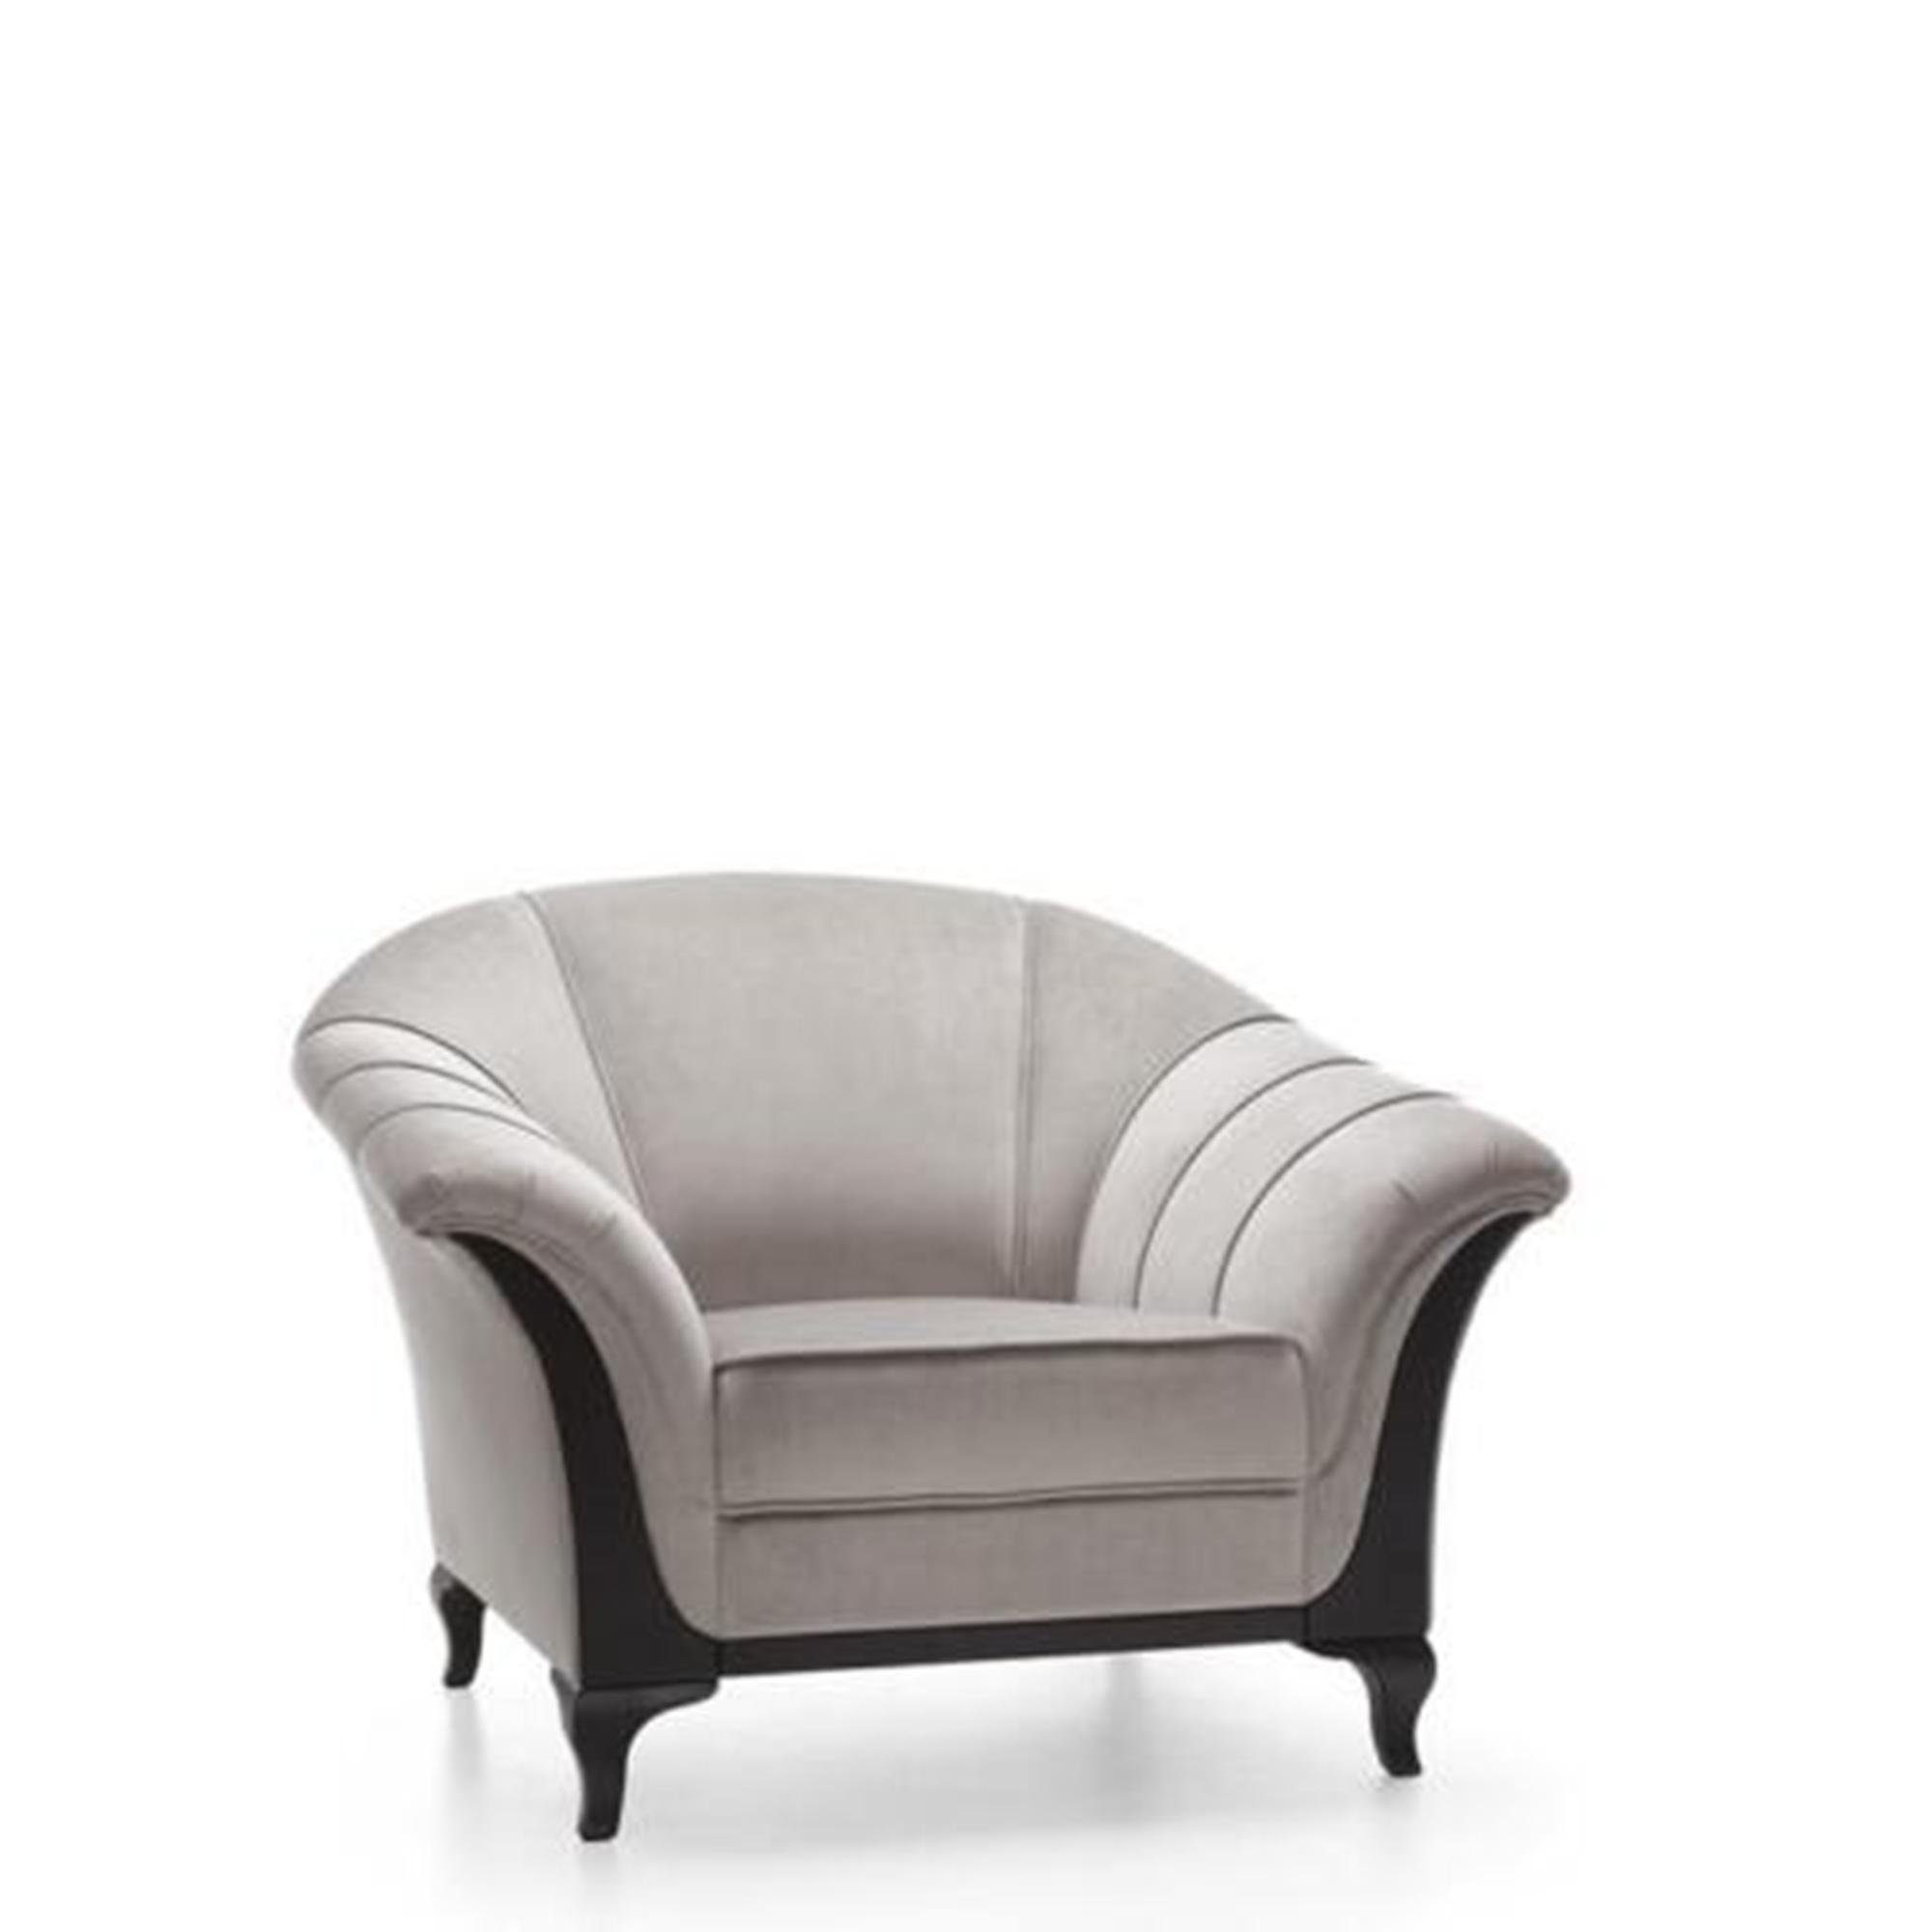 JVmoebel Sofa Moderner grauer luxus Sessel Relax Möbel Design Neu, Made in Europe